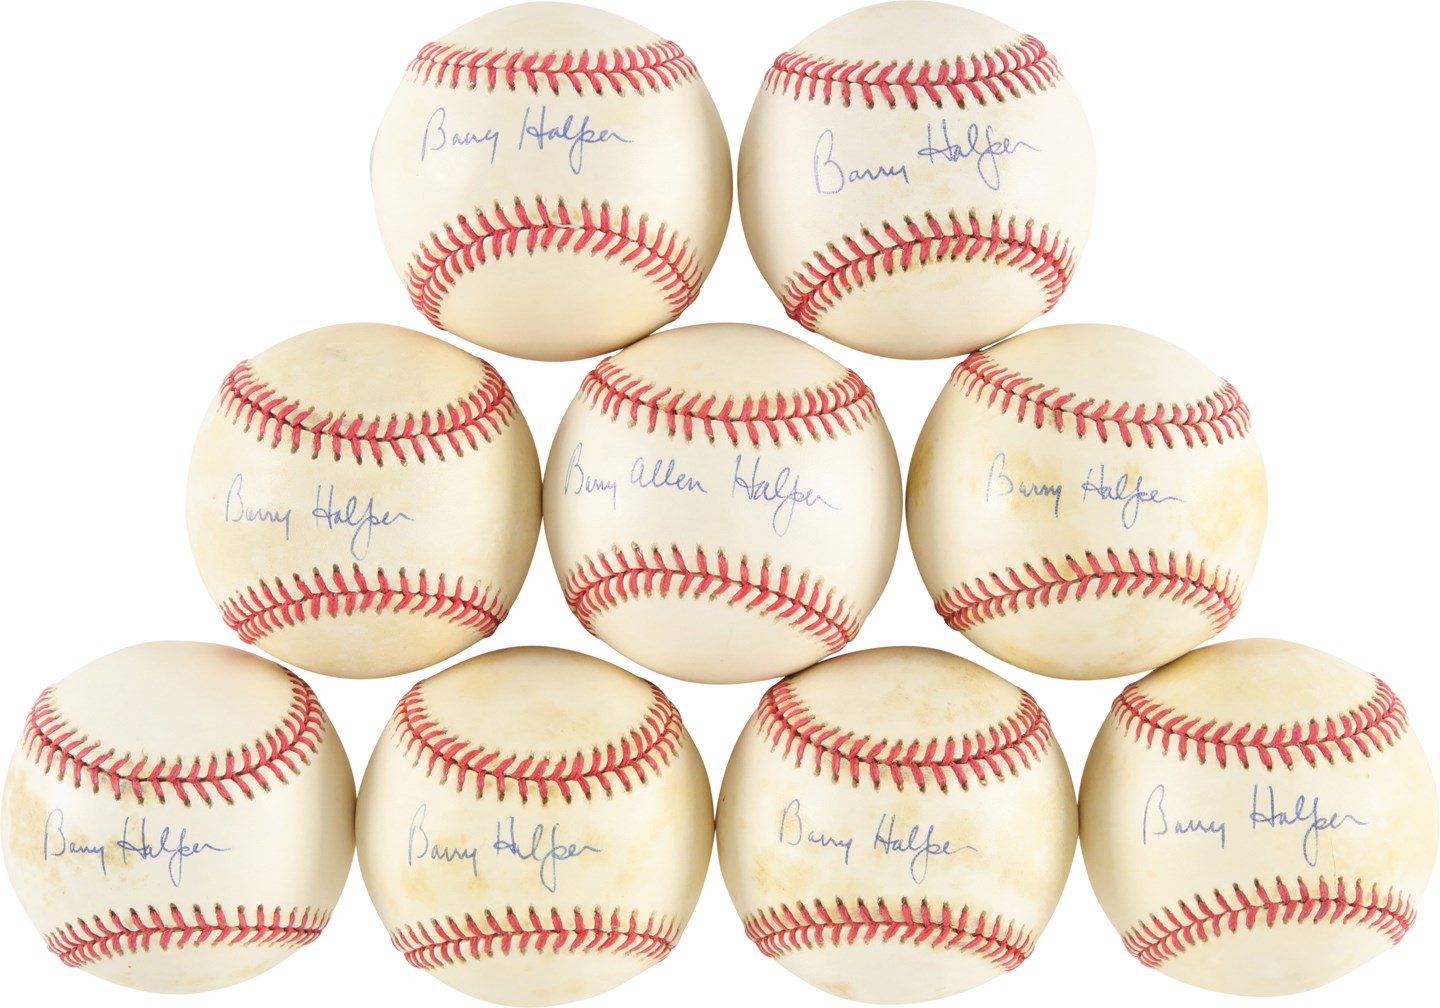 - Barry Halper Single-Signed Baseball Collection (9)